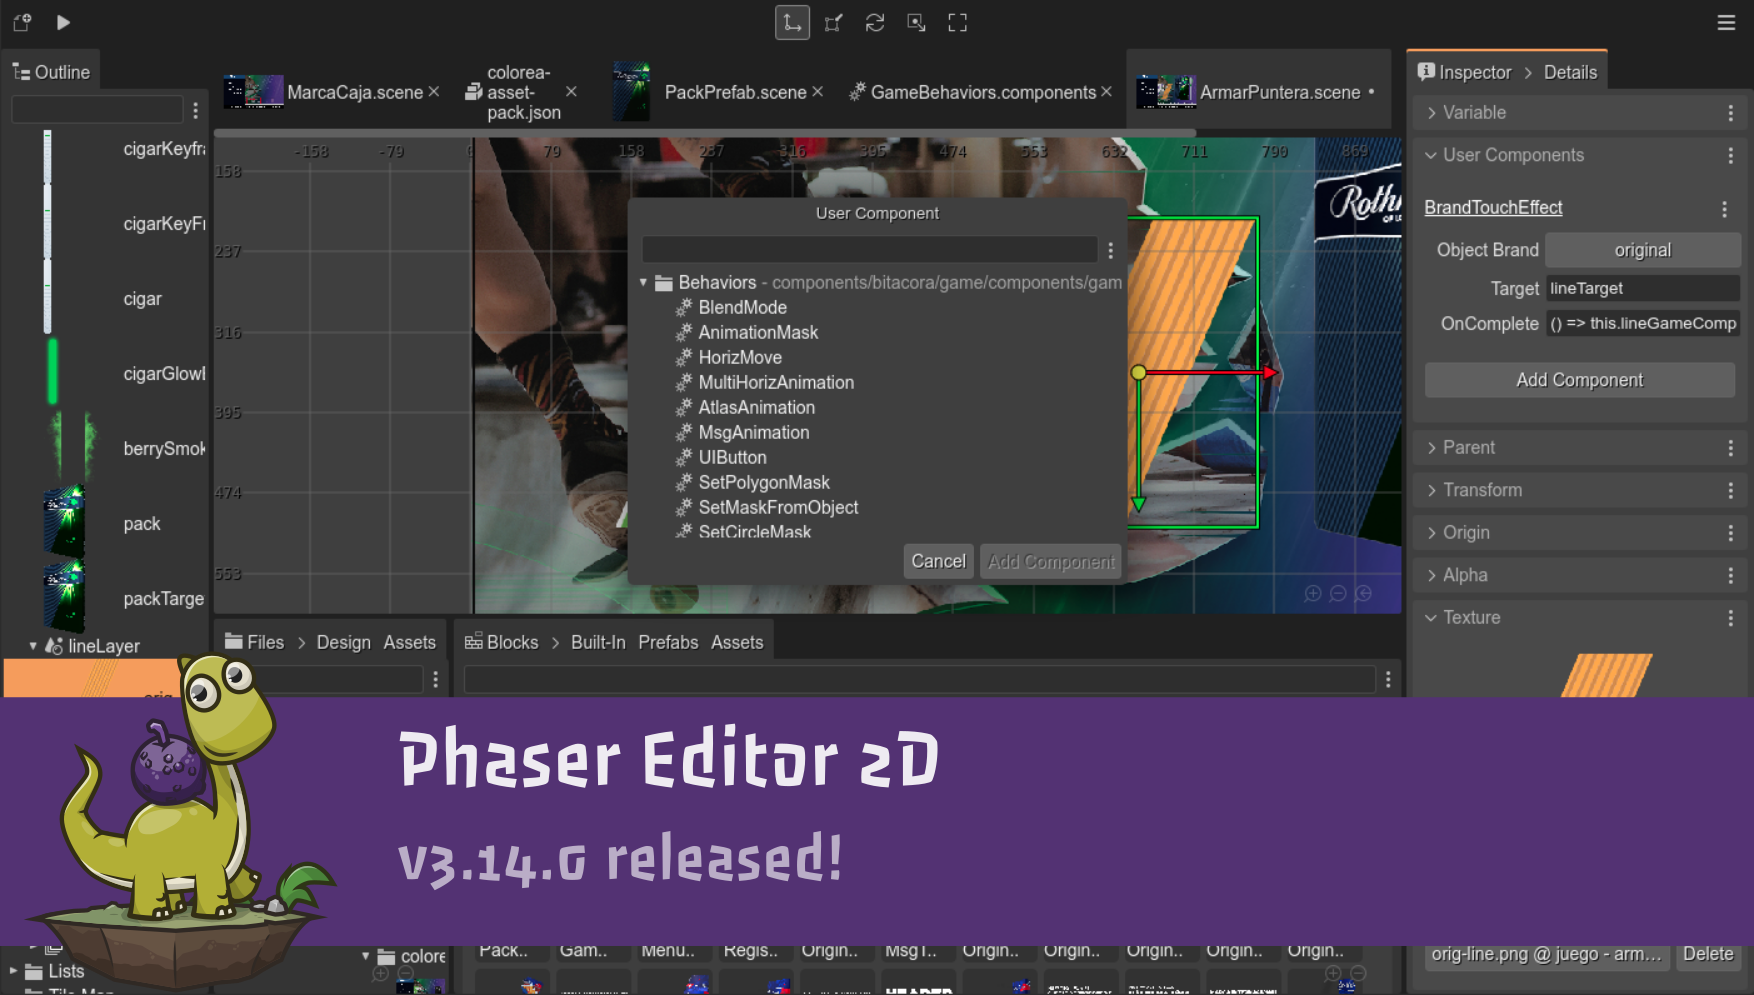 Phaser Editor 2D v3.14.0 released!